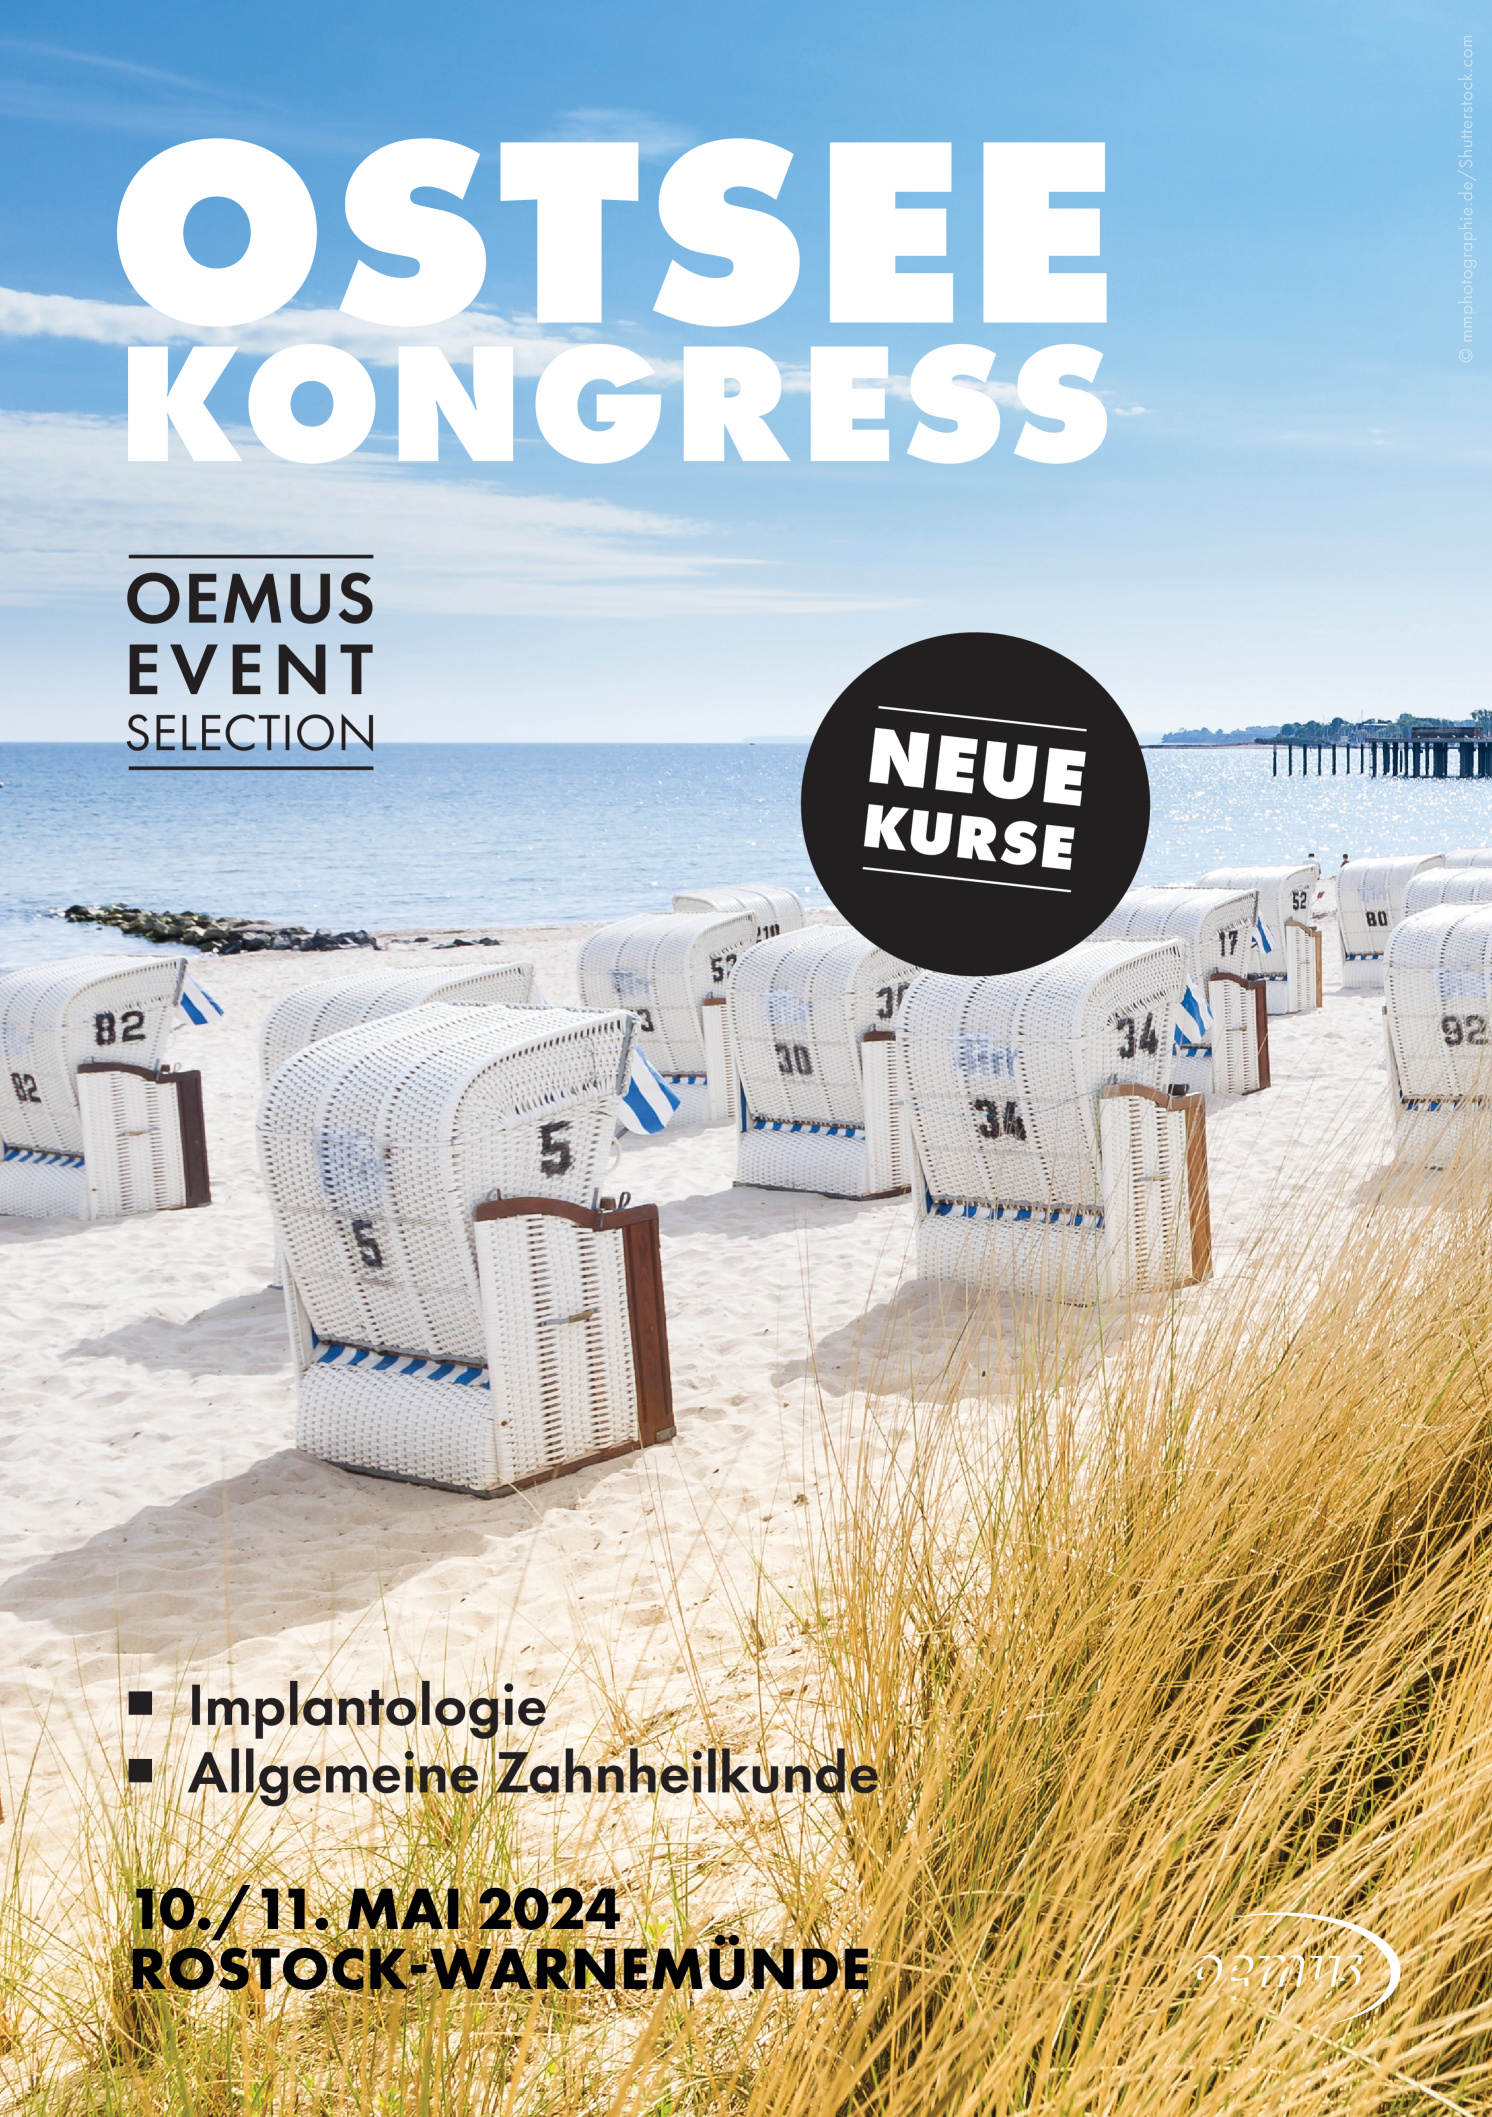 Ostseekongress / 16. Norddeutsche Implantologietage